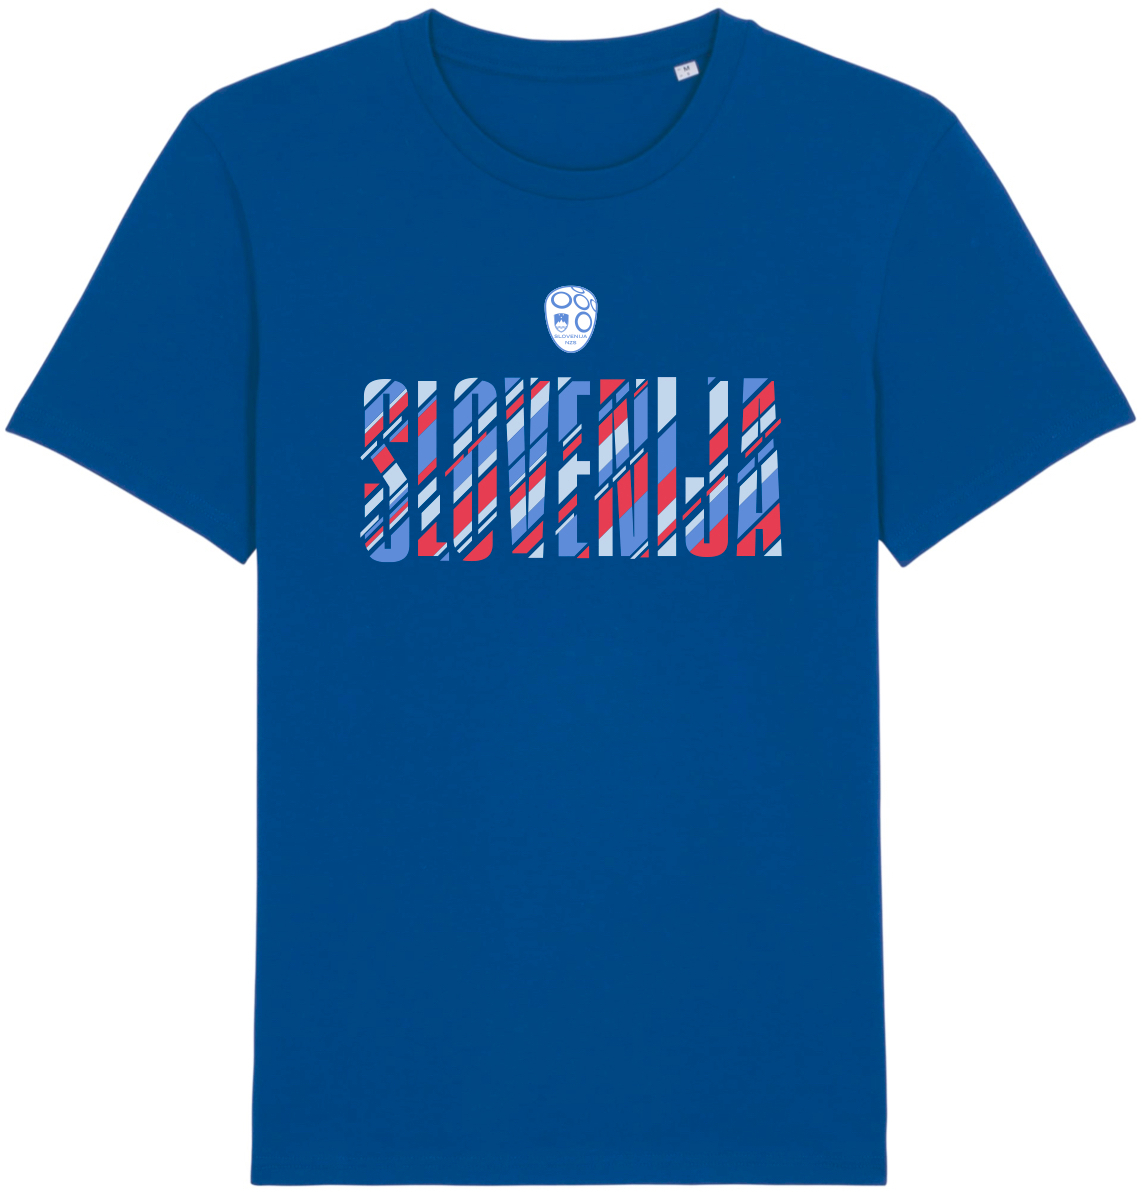 T-shirt Nike NZSx11TS SLOVENIJA shirt men blue